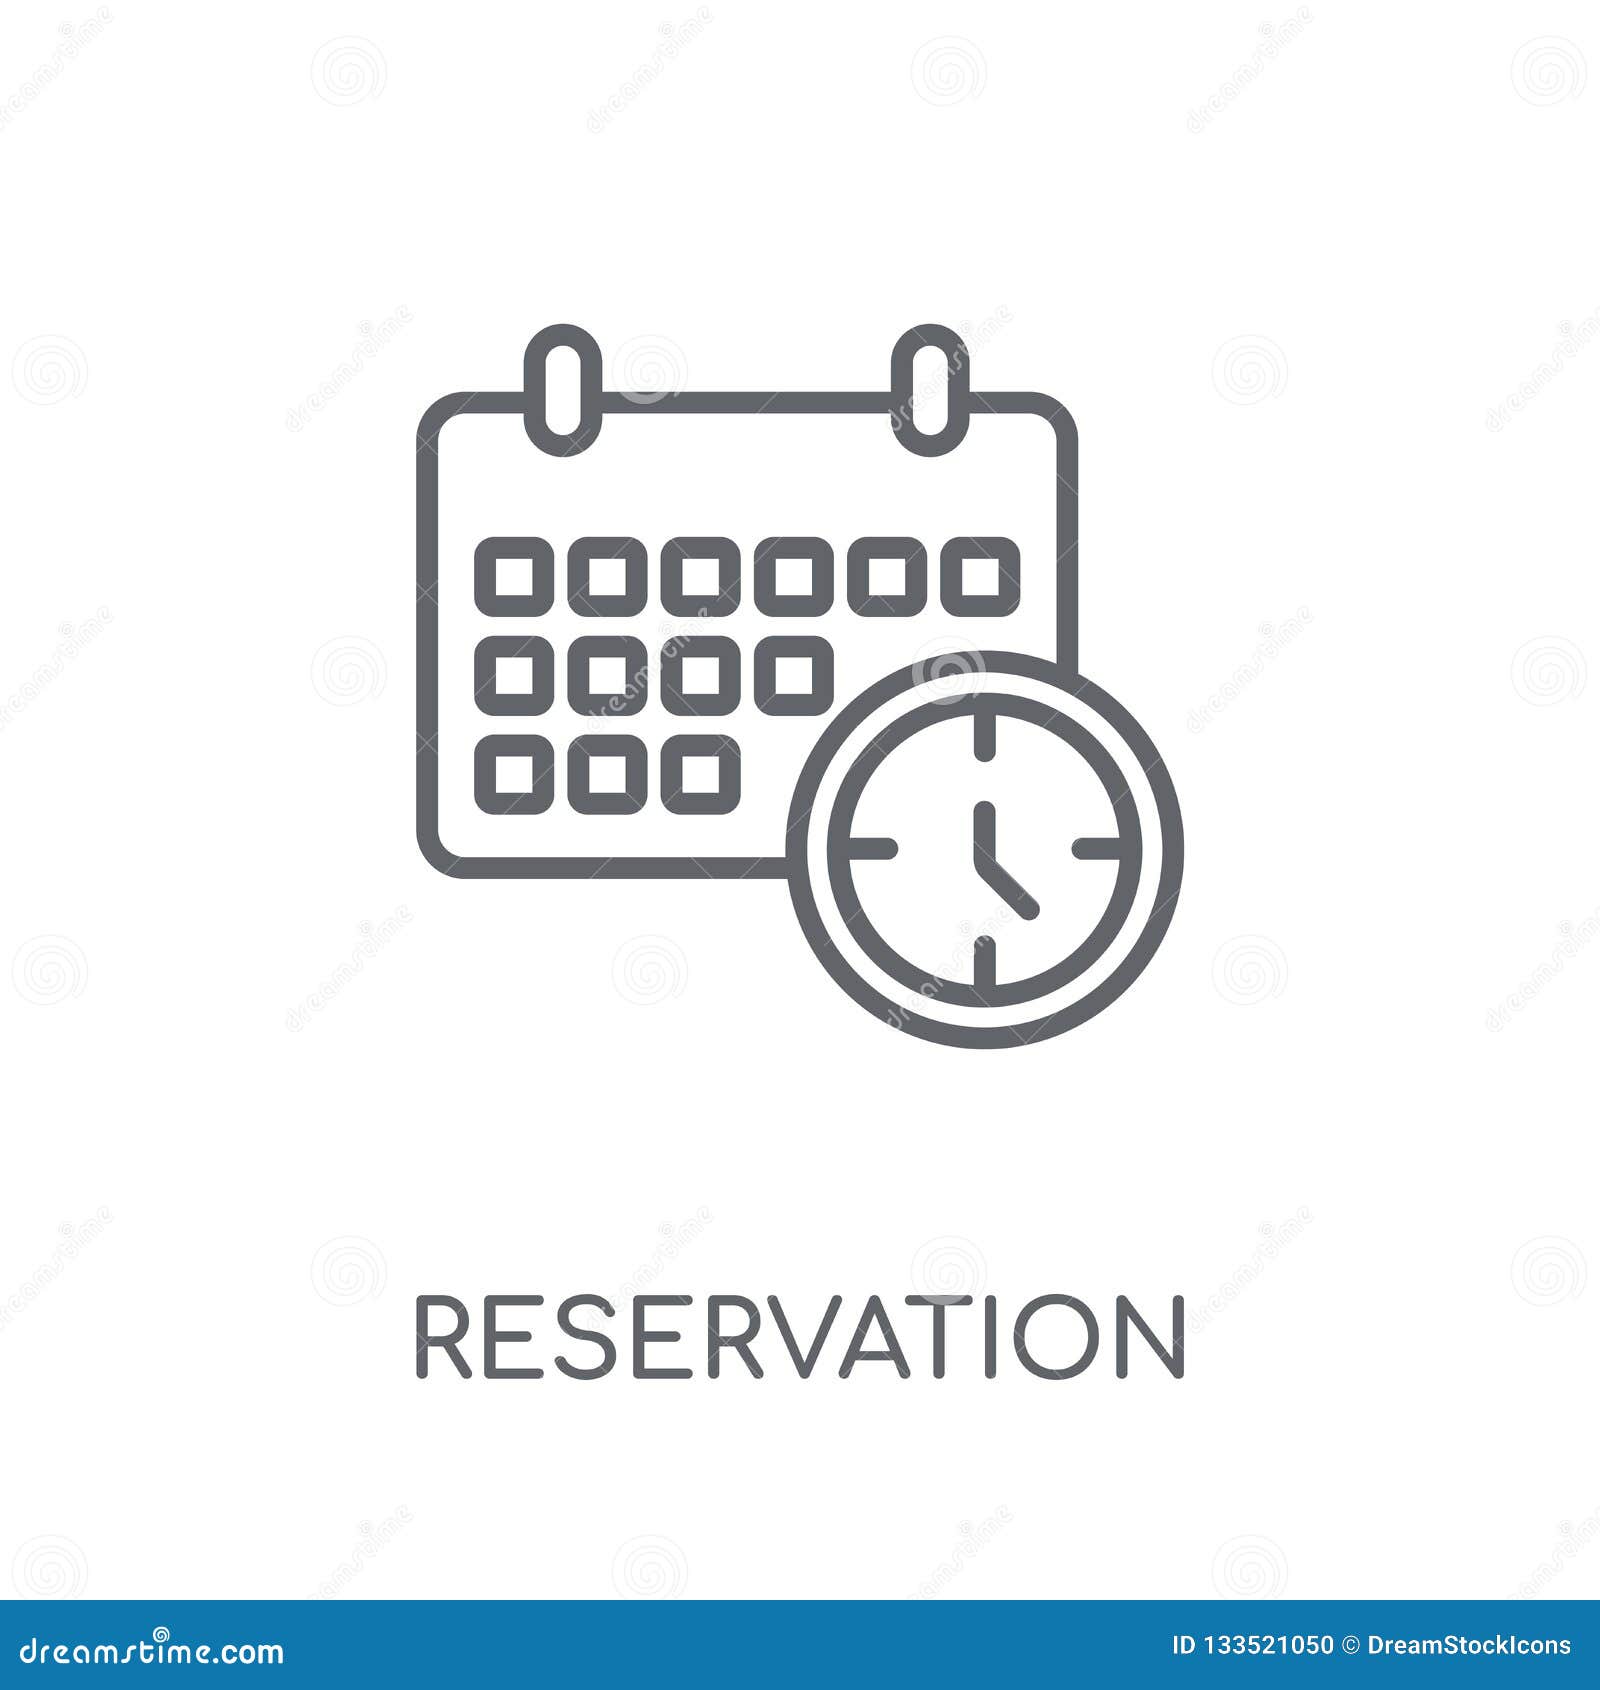 reservation linear icon. modern outline reservation logo concept